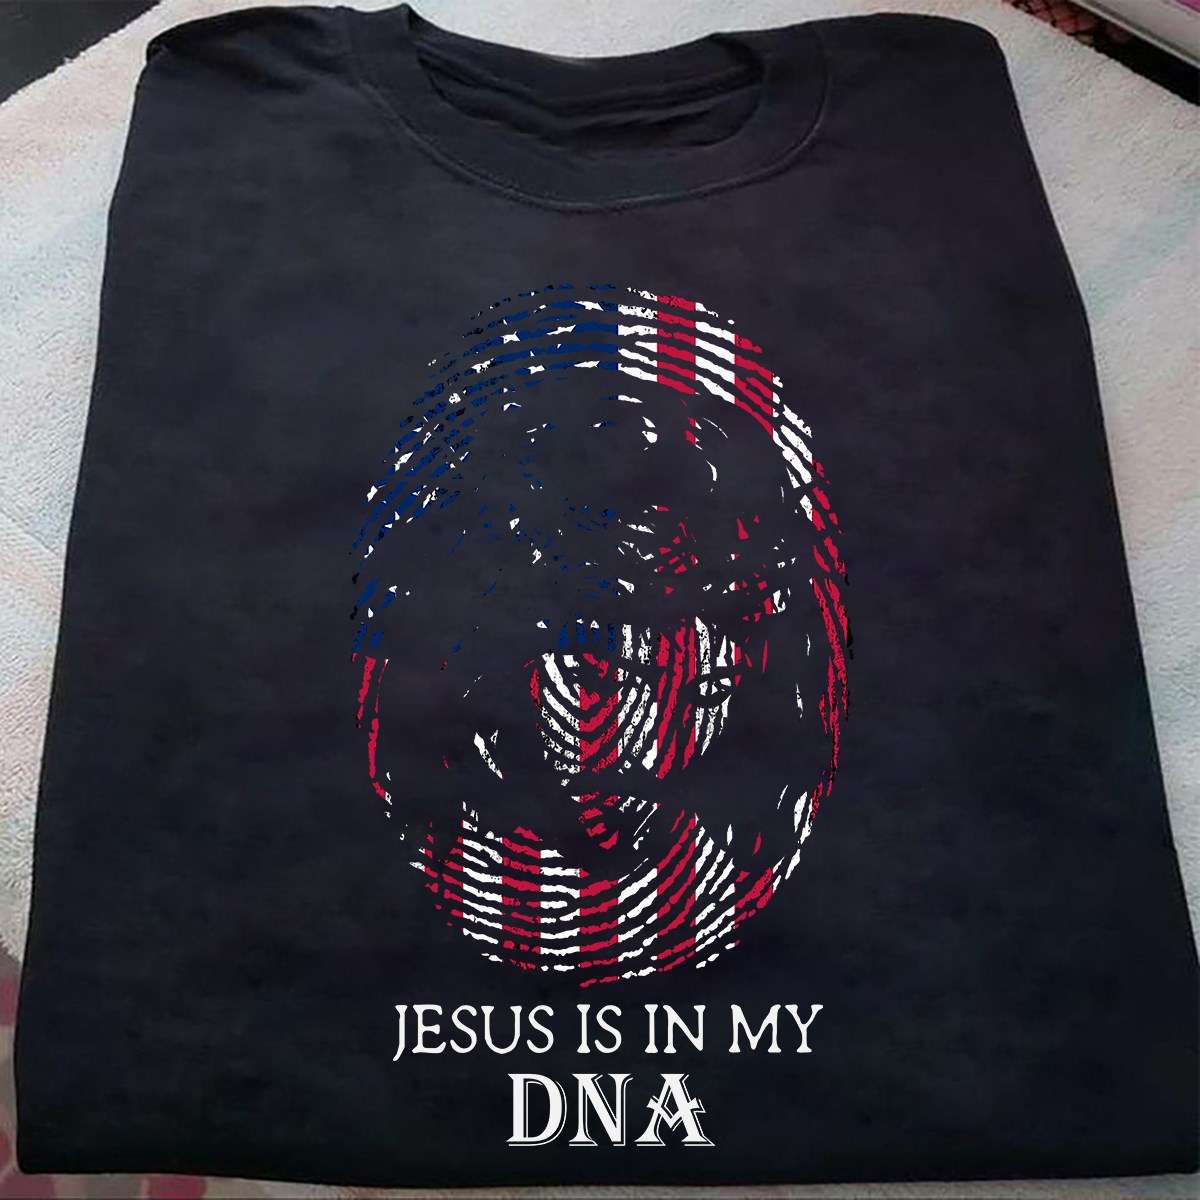 Jesus is in my DNA - Jesus the god, Americans believe in Jesus